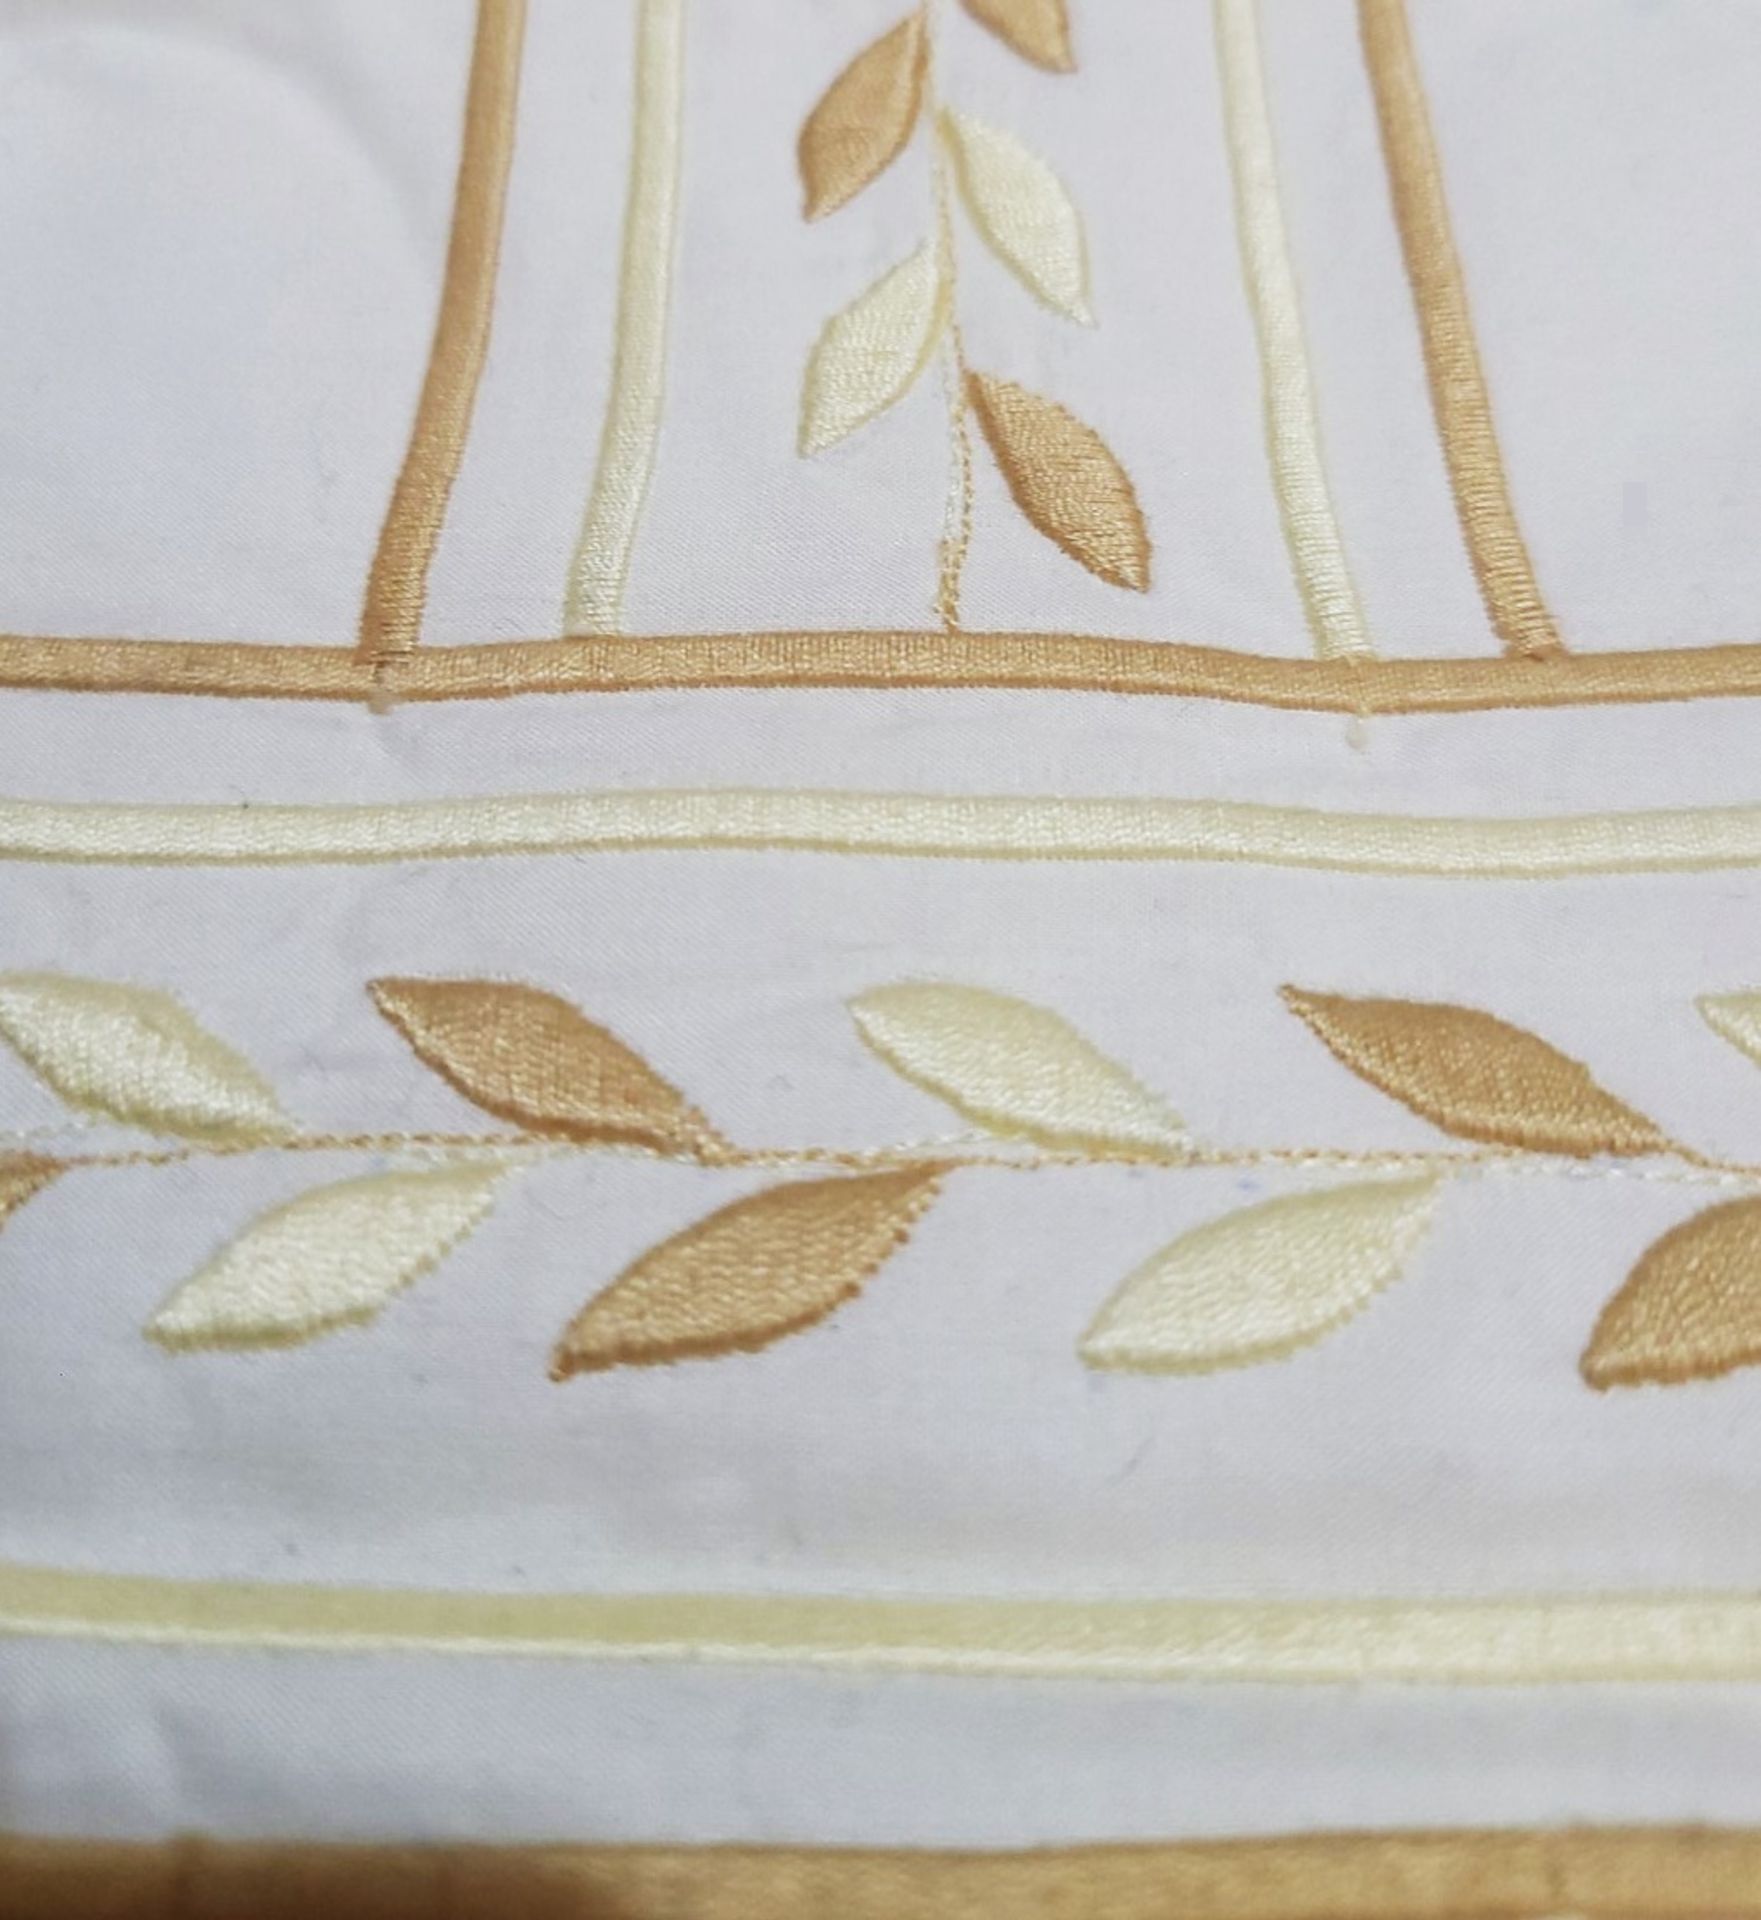 1 x PRATESI Impero Gold Embroidery Quilt in Angel Skin (240x260cm) - Original Price £1,580.00 - Image 5 of 5